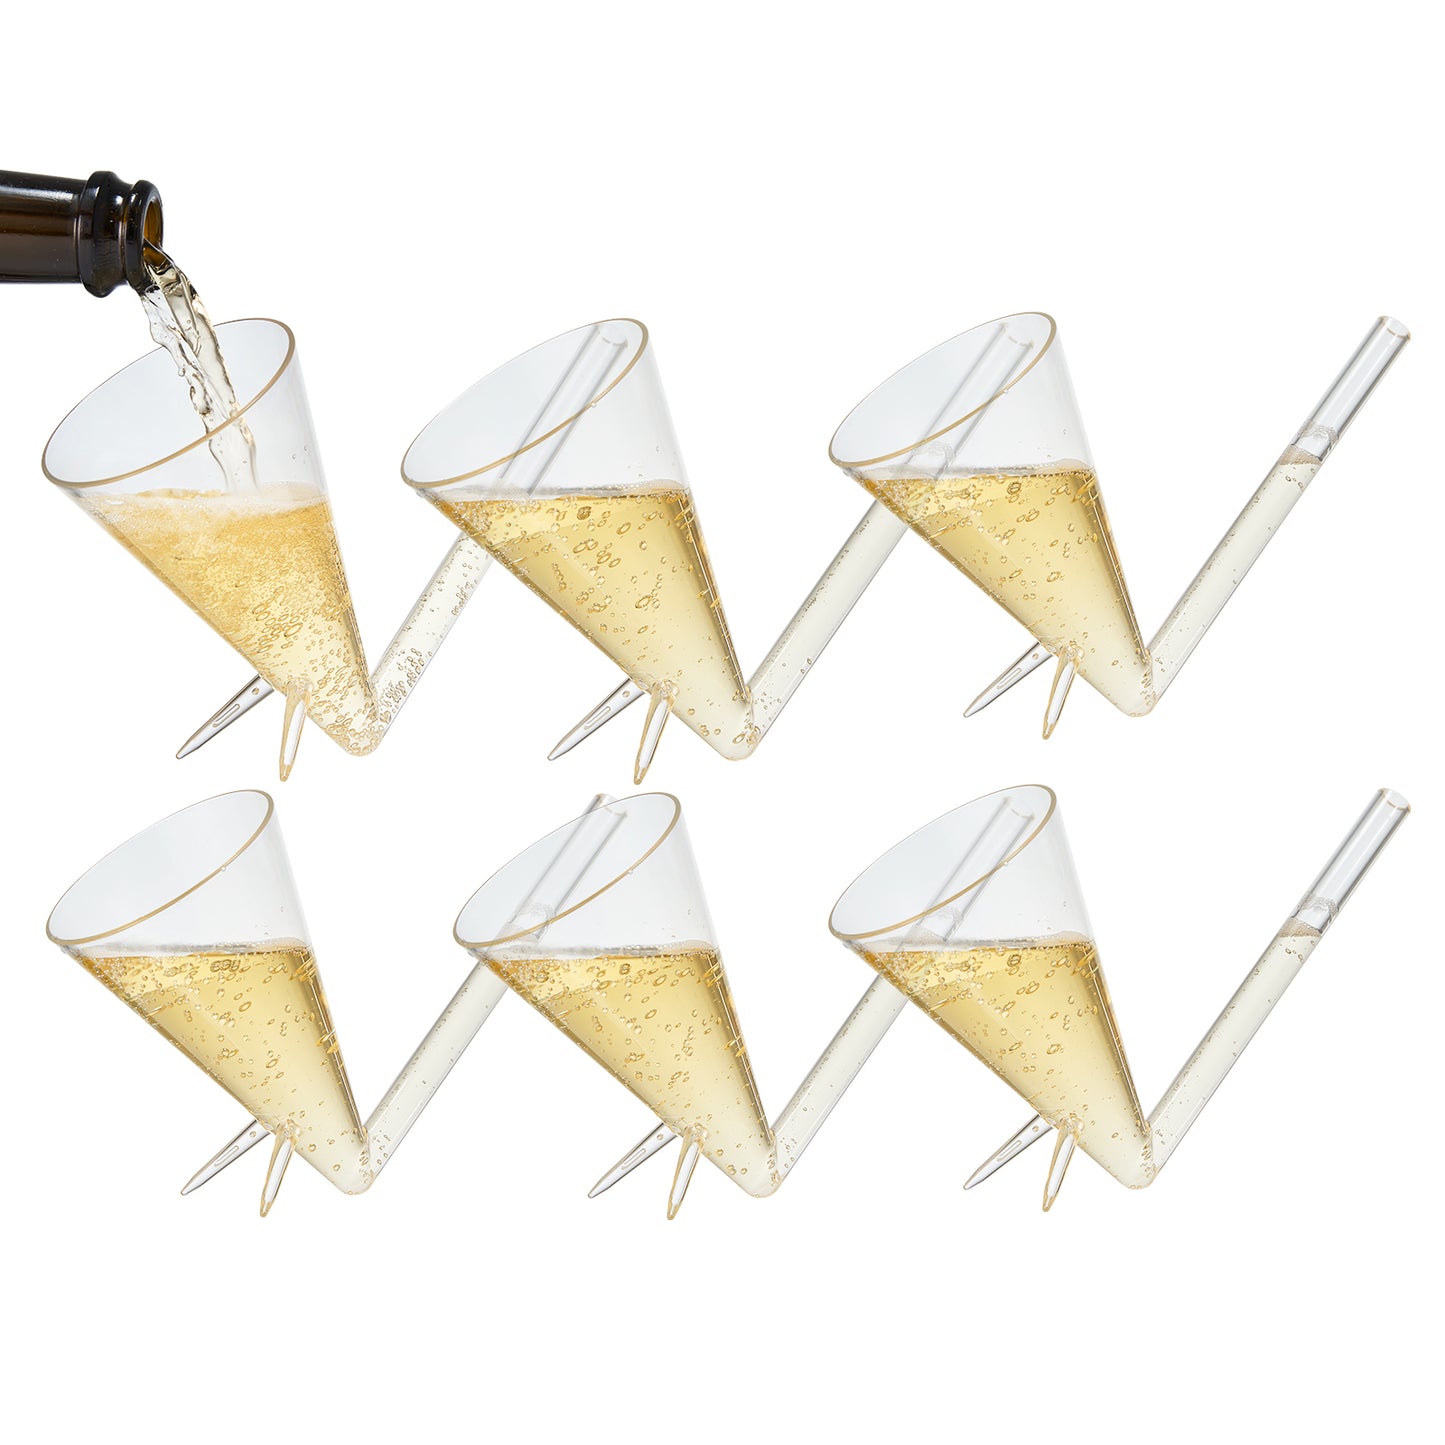 Festa Acrylic Champagne Shooter, Set of 6